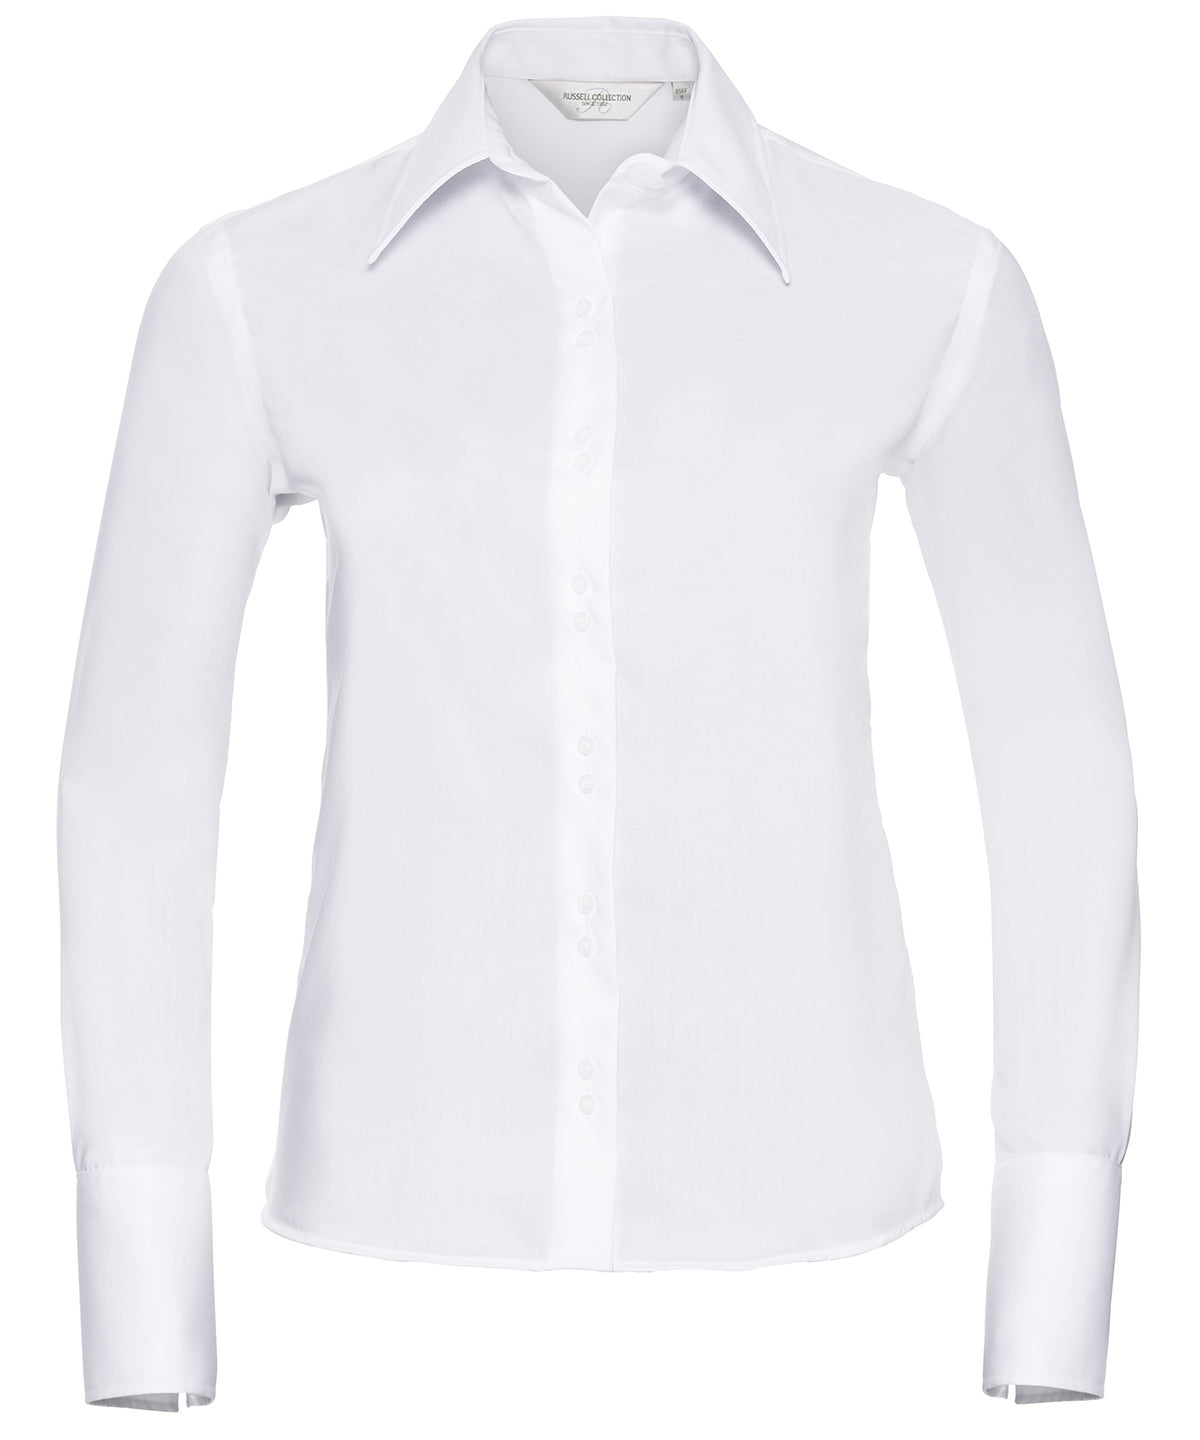 Bolir - Women's Long Sleeve Ultimate Non-iron Shirt